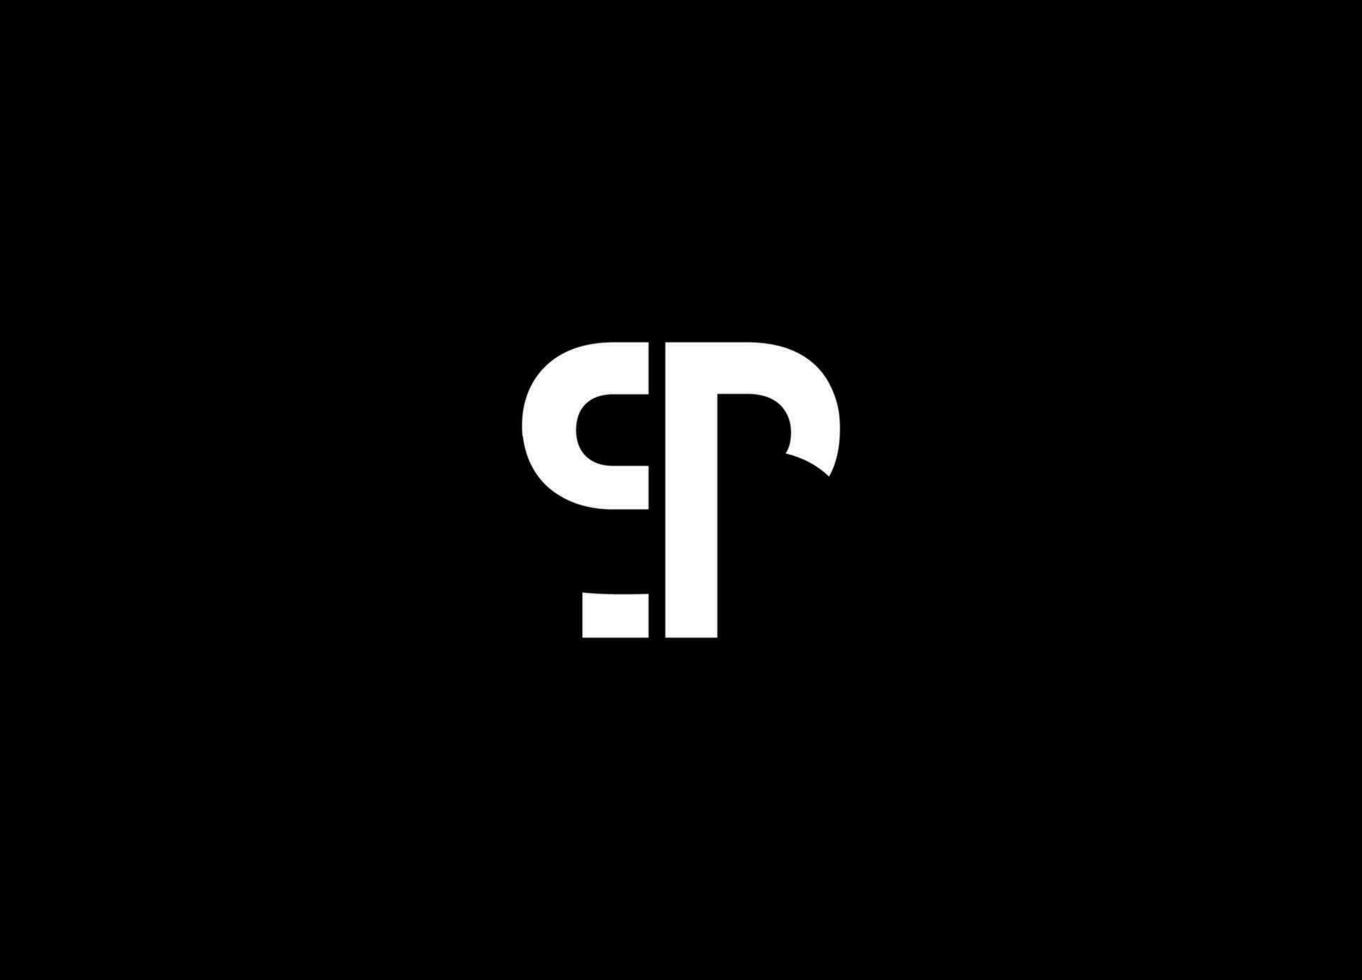 Modern Initial SP logo design inspiration. Initial Letter SP Logo Template Design vector